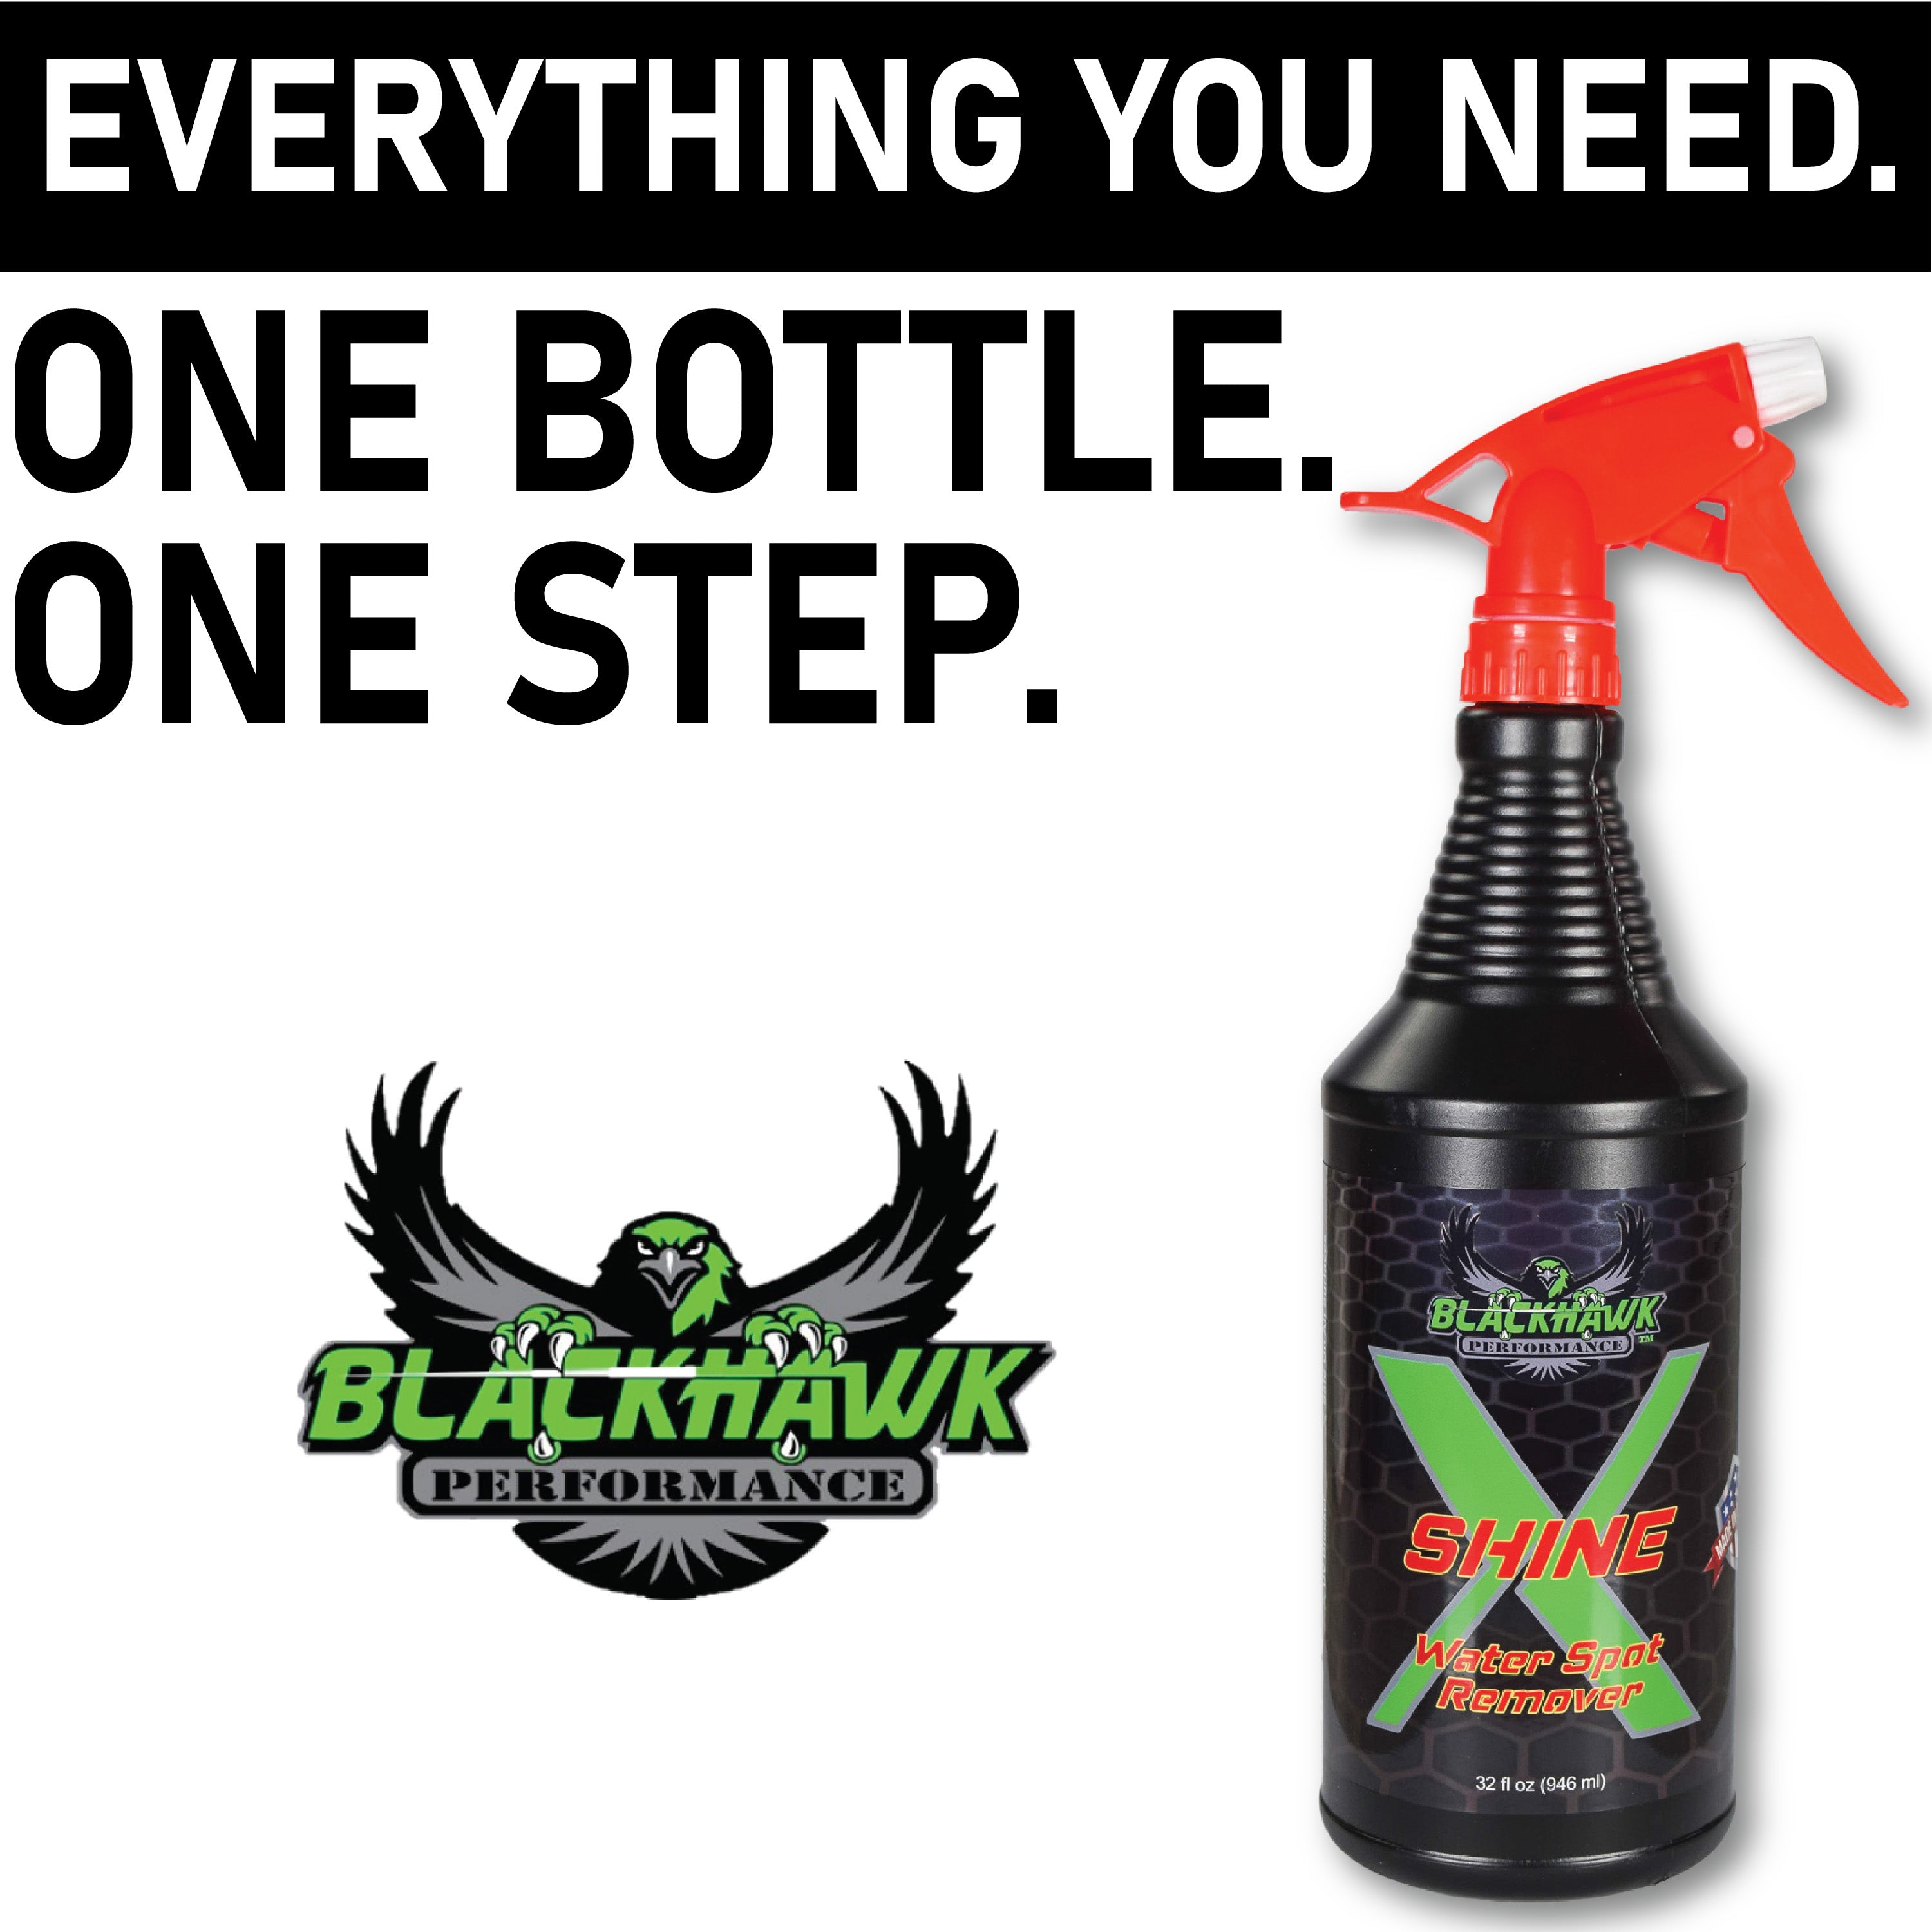 Blackhawk Performance Shine X Streak Free Water Spot Remove (32oz, 2 Pack)